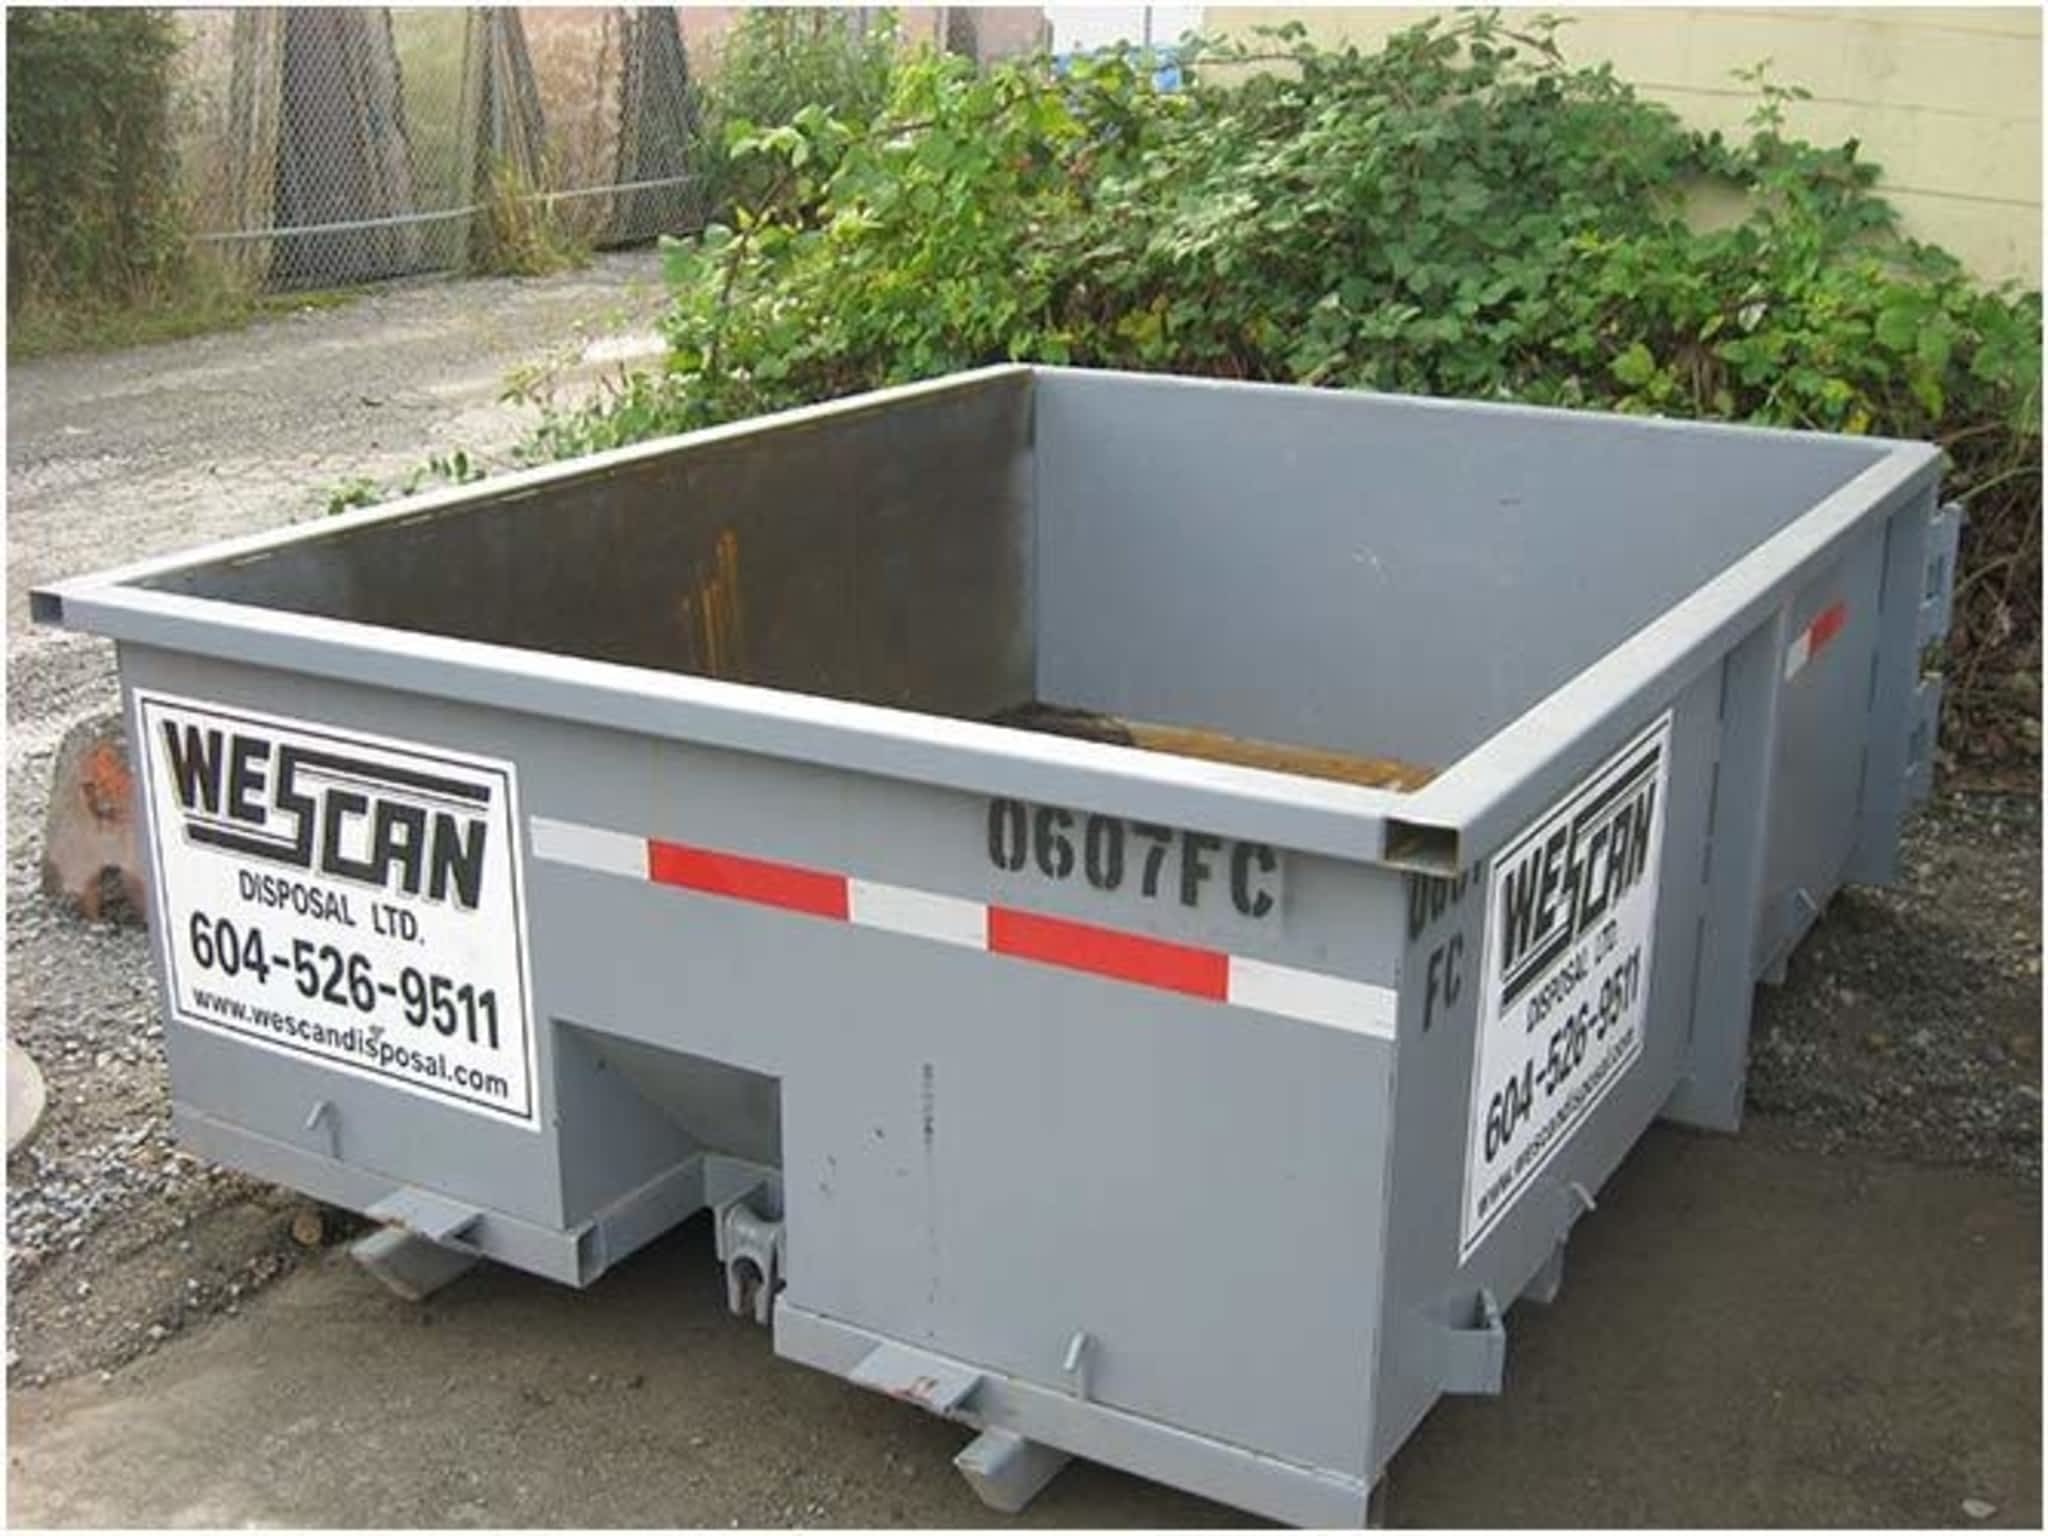 photo Wescan Disposal Ltd